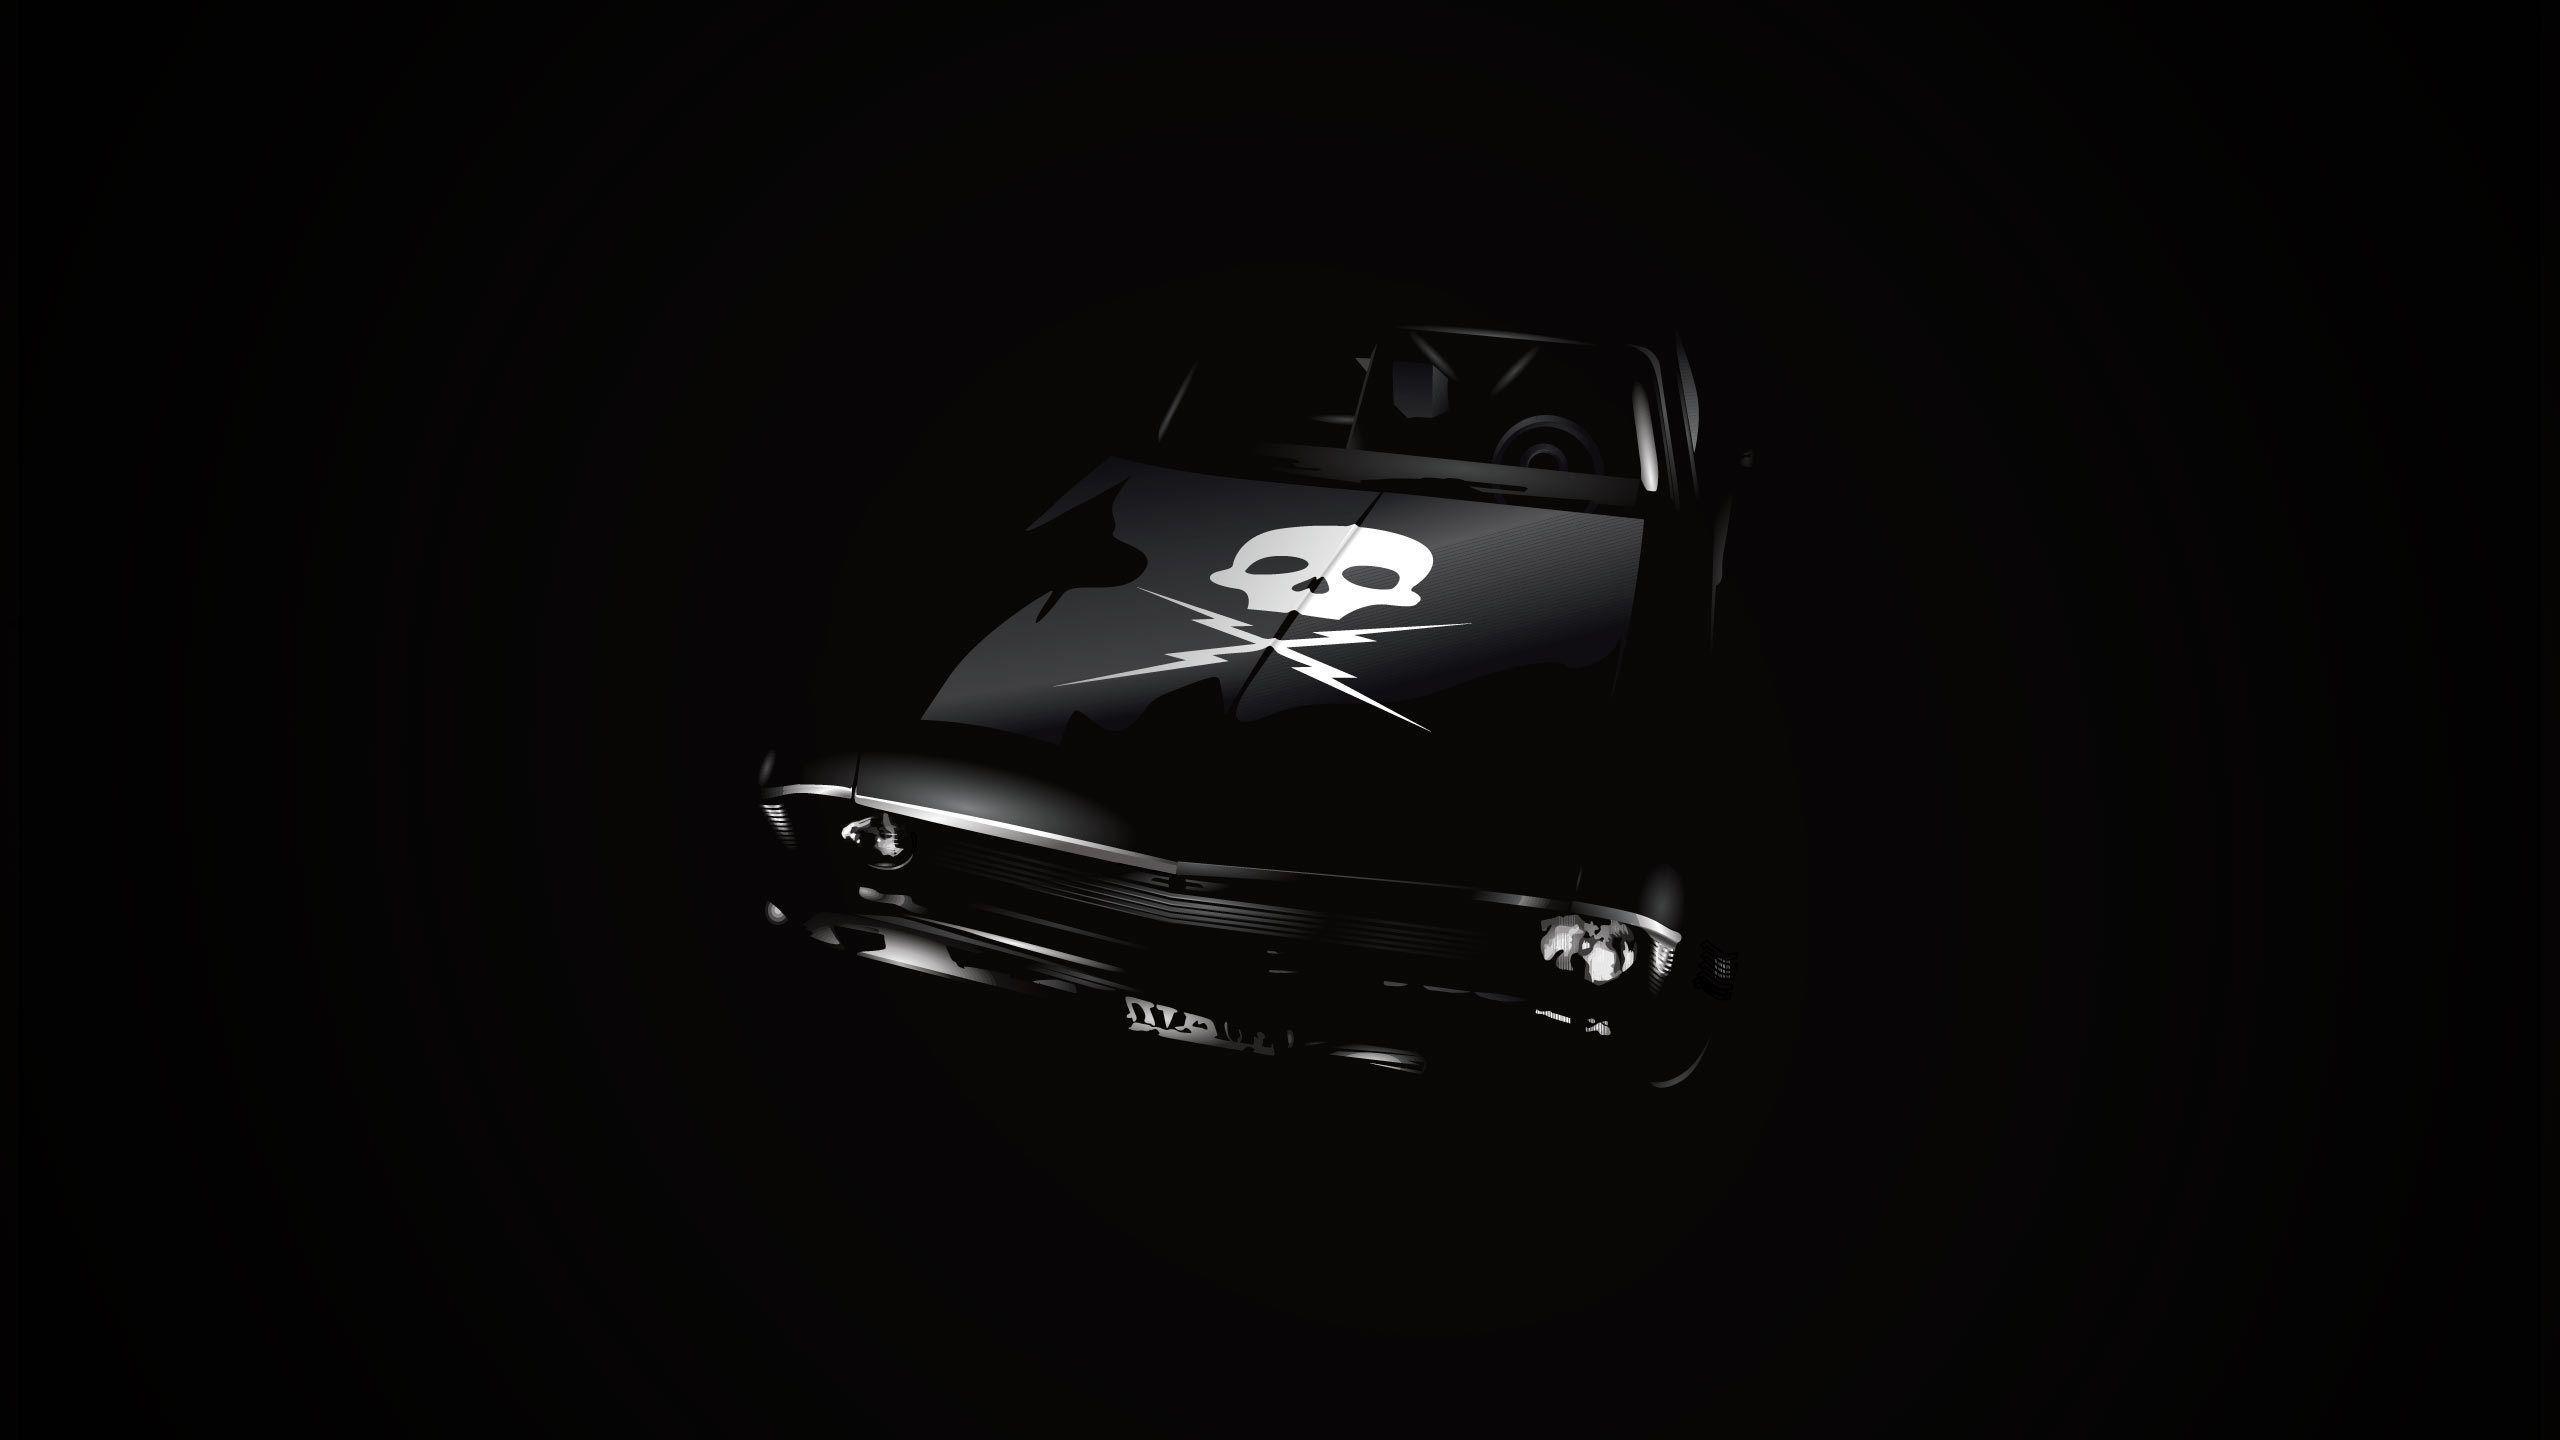 Download wallpaper Black Background, Chevrolet, Death Proof, skull